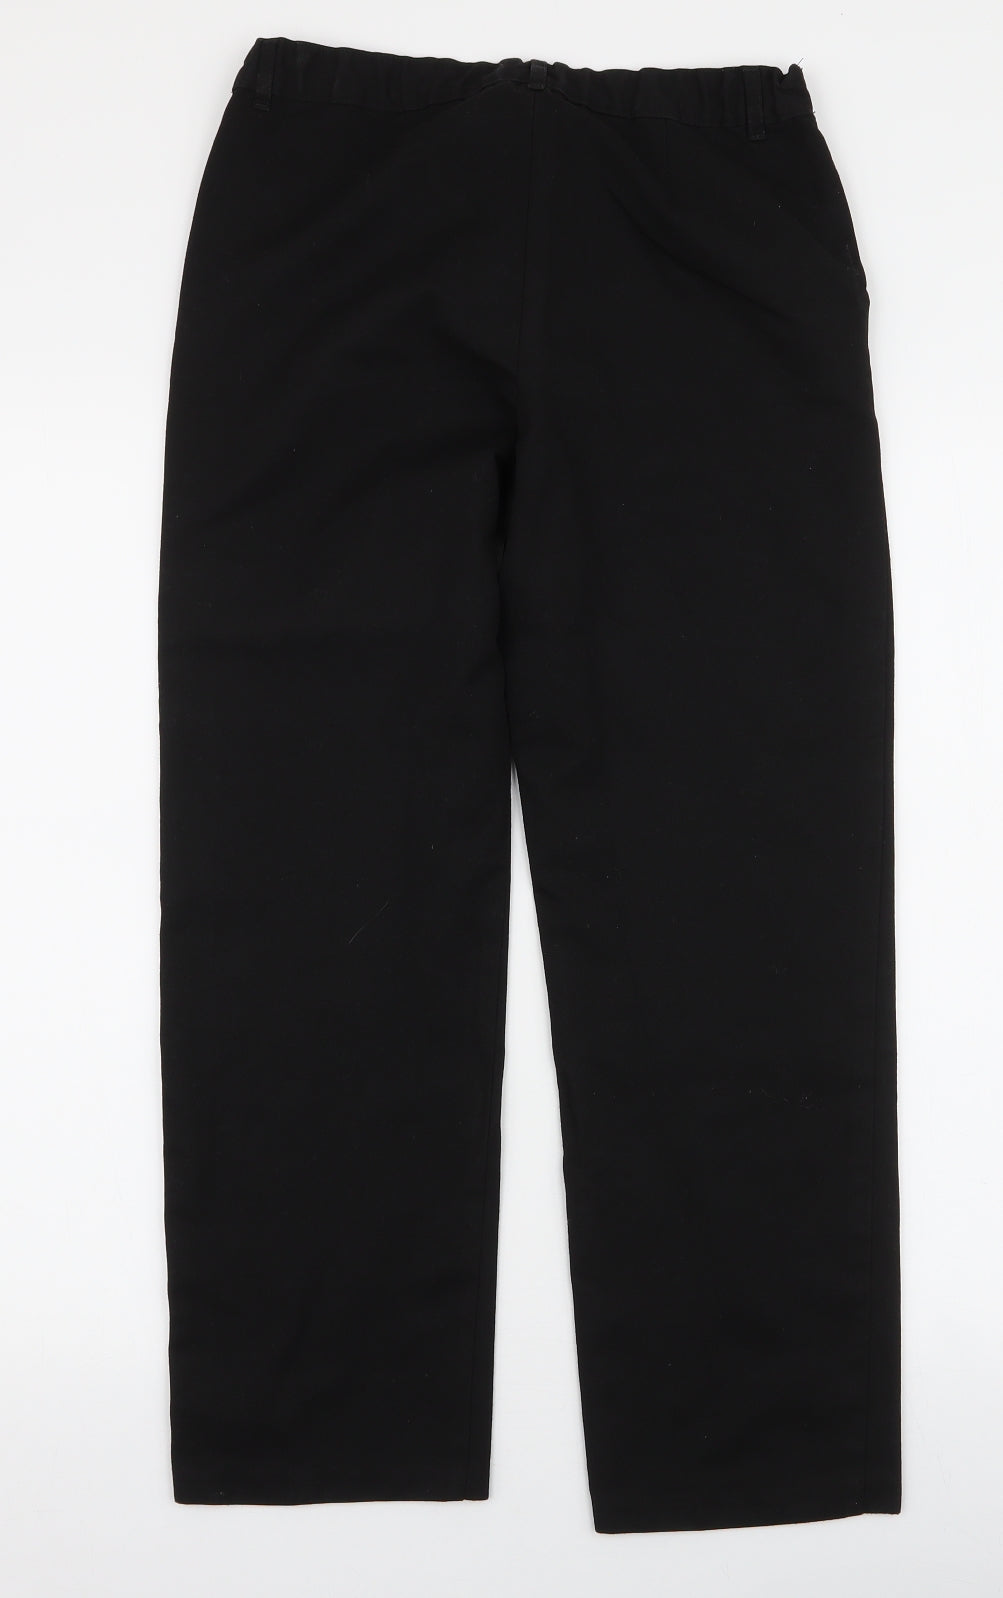 F&F Boys Black  Polyester Dress Pants Trousers Size 11-12 Years  Regular Zip